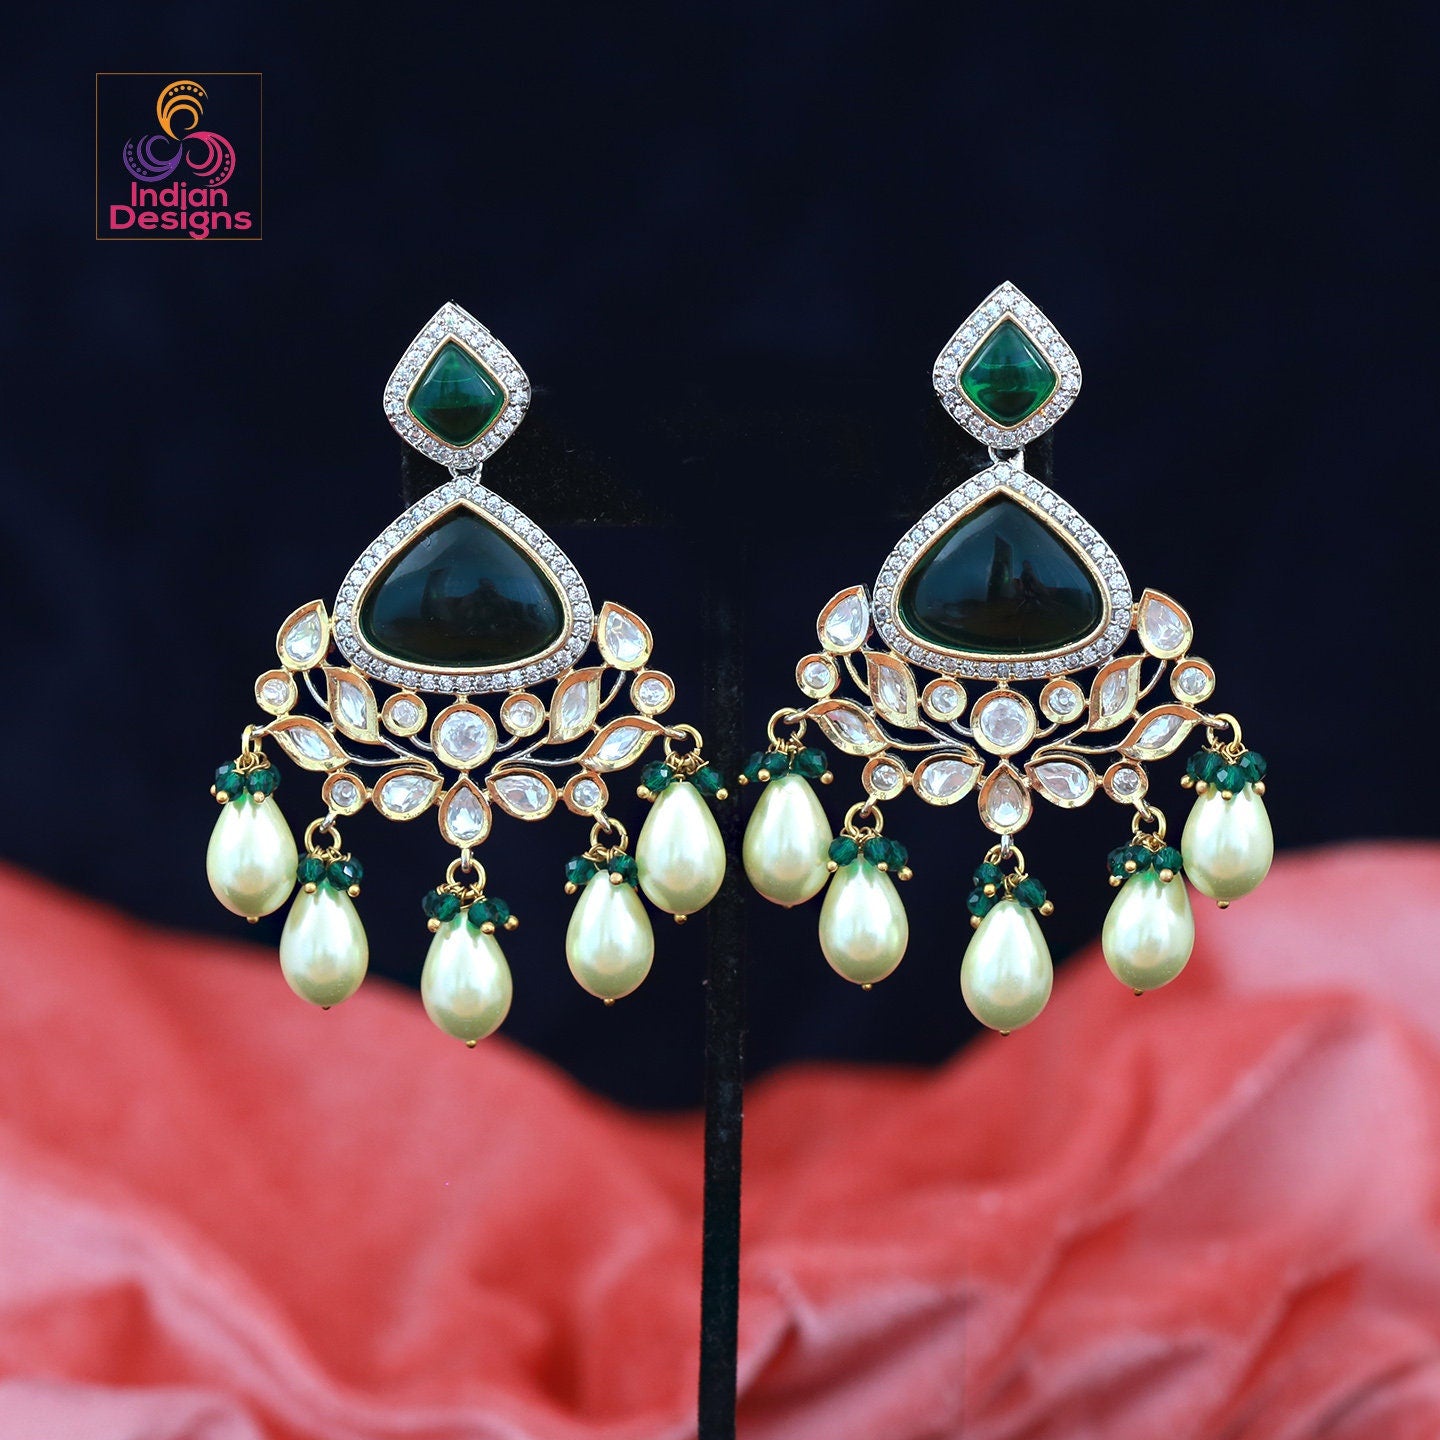 Kundan bridal earrings | Gold Plated Kundan Earrings with Pearl drops | Stylish Statement Earrings wedding | Indian Wedding Bridal Jewelry